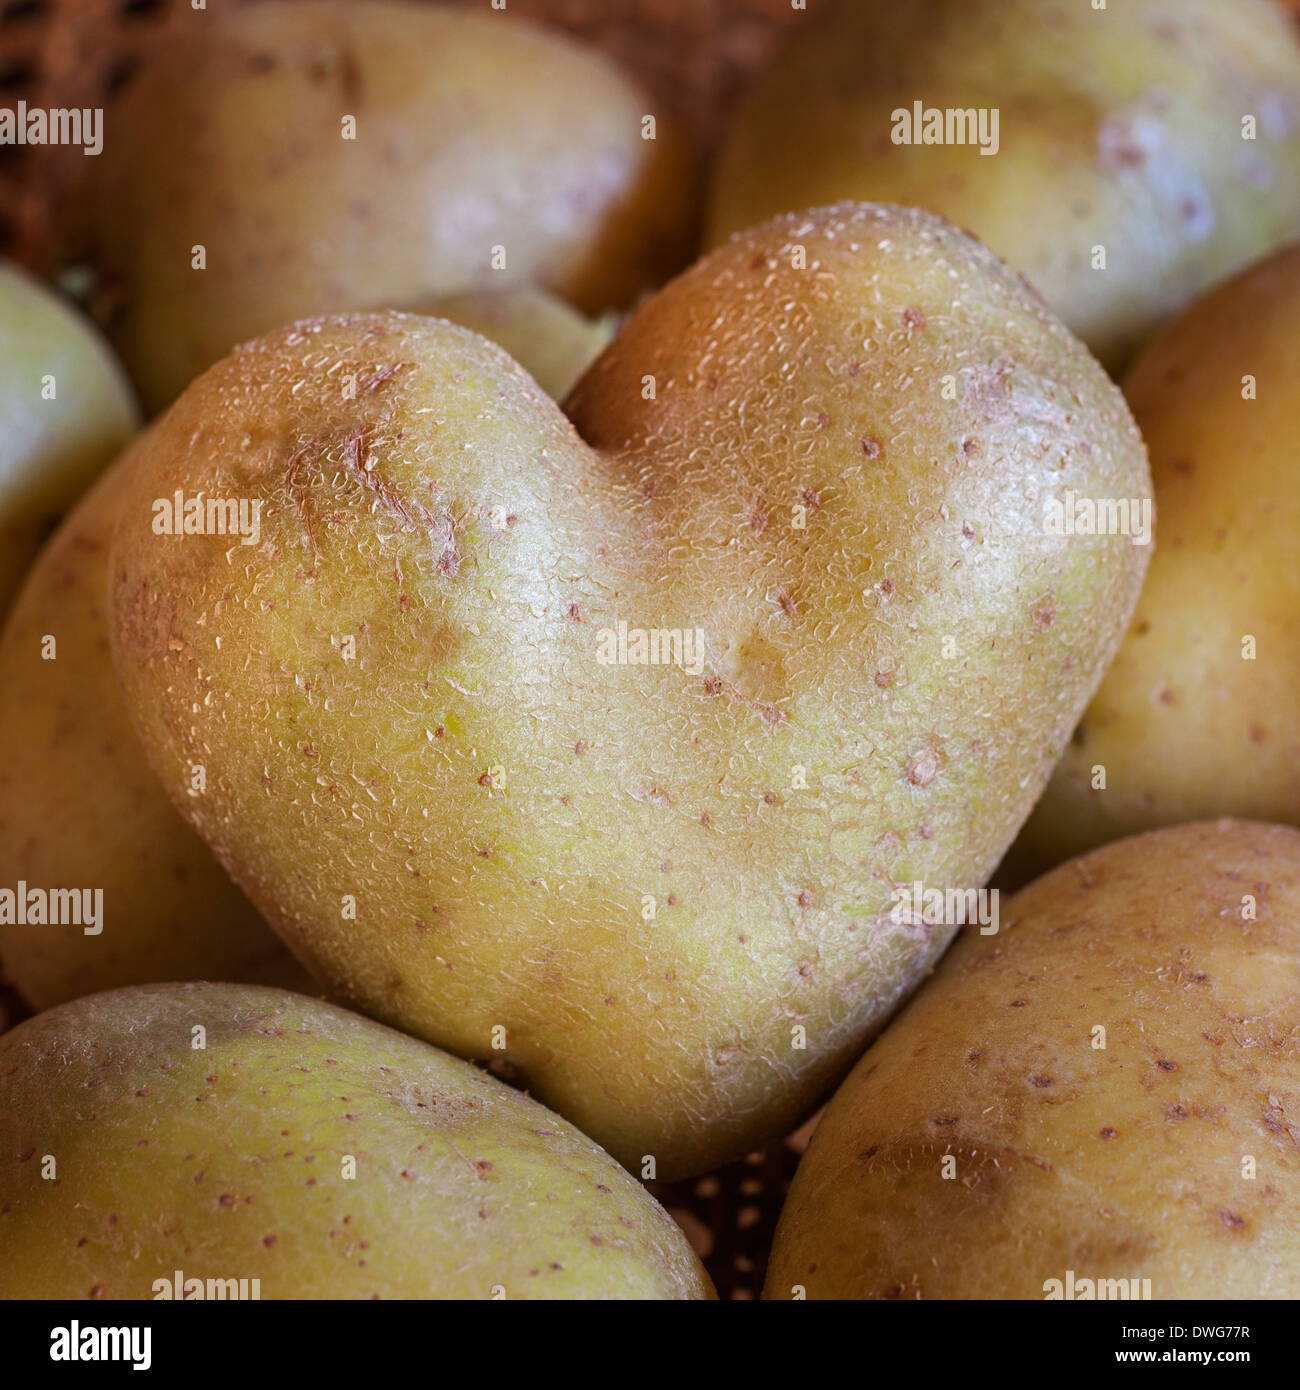 Heart-shaped potato on heap of potatoes Stock Photo